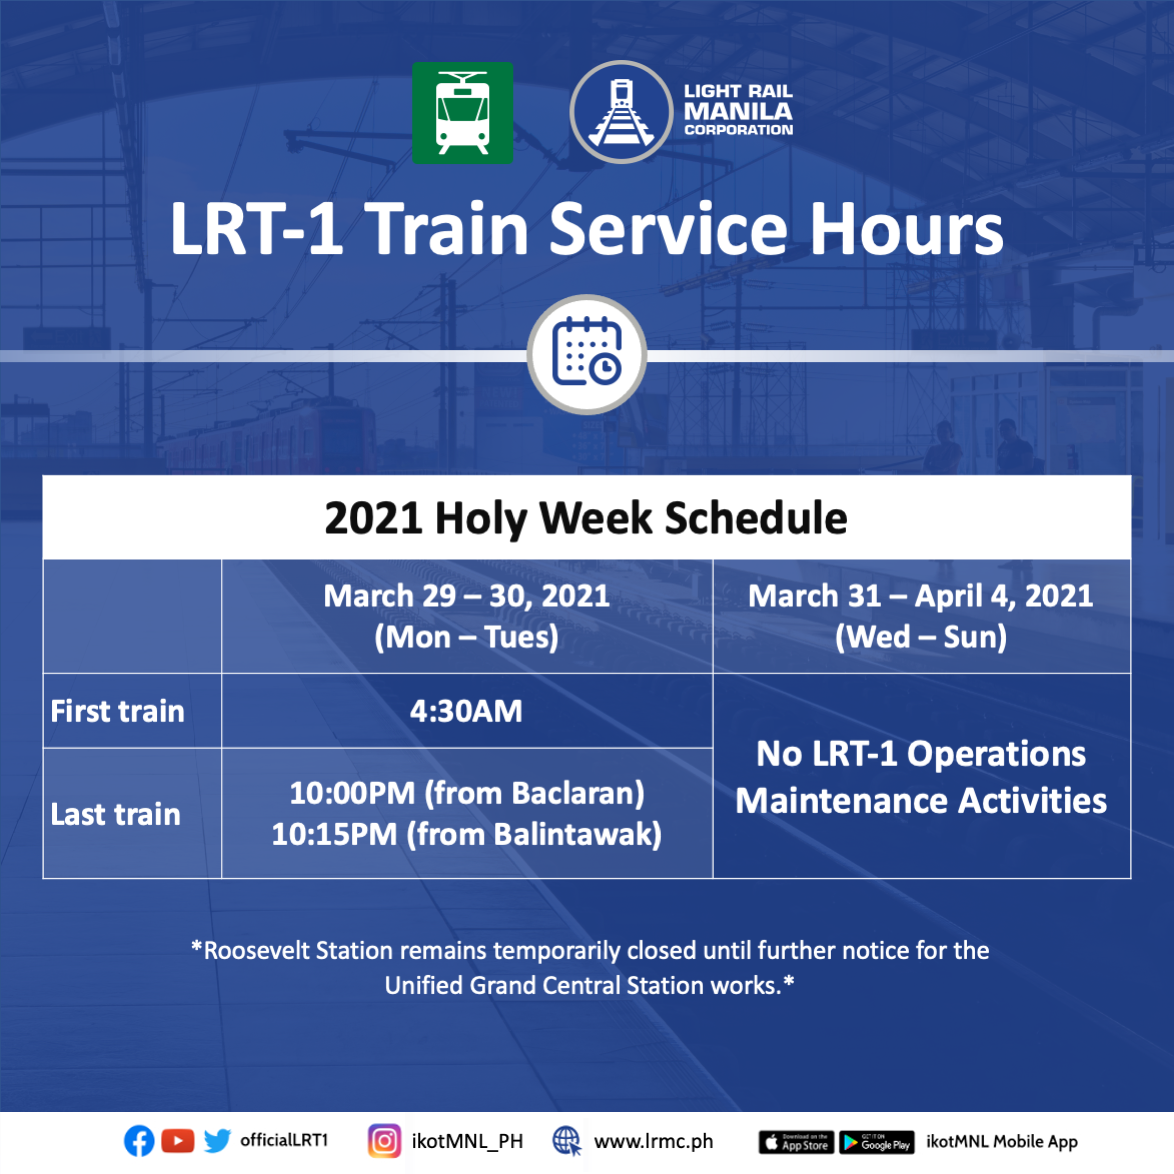 LRMC announces LRT-1 2021 Holy Week schedule